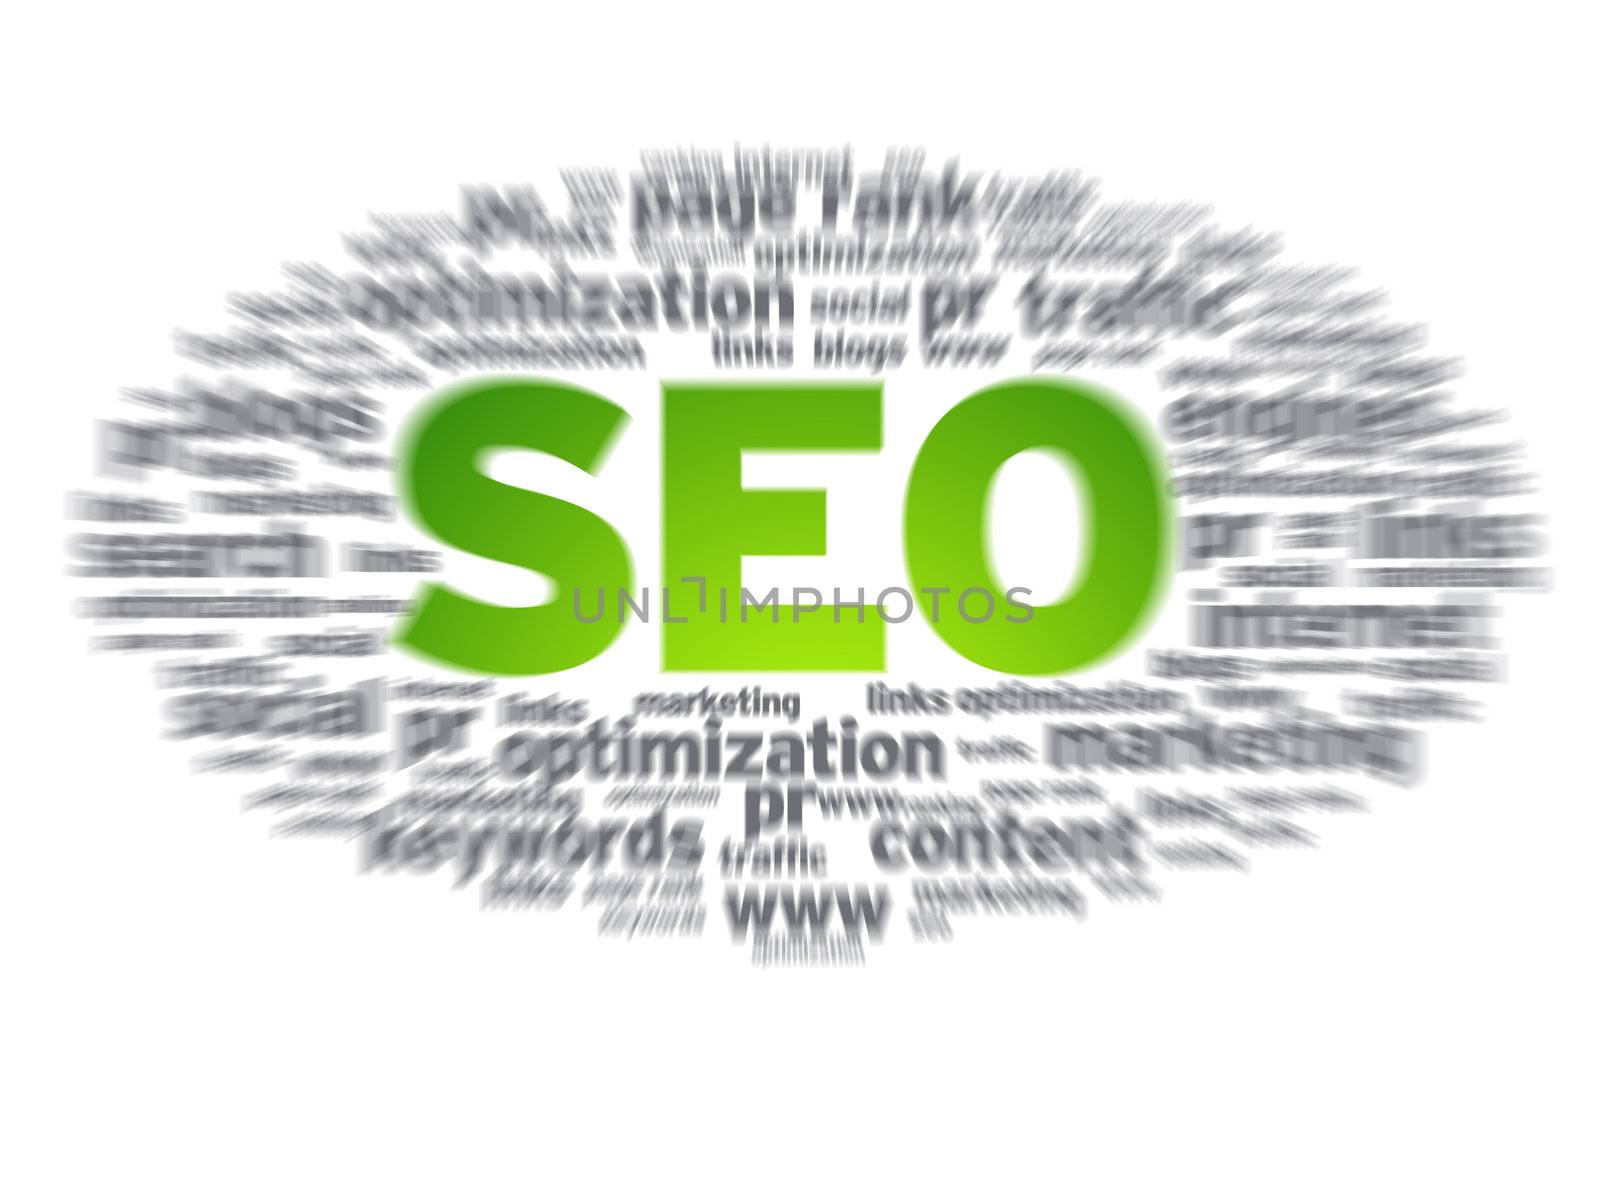 Search Engine Optimization by kbuntu